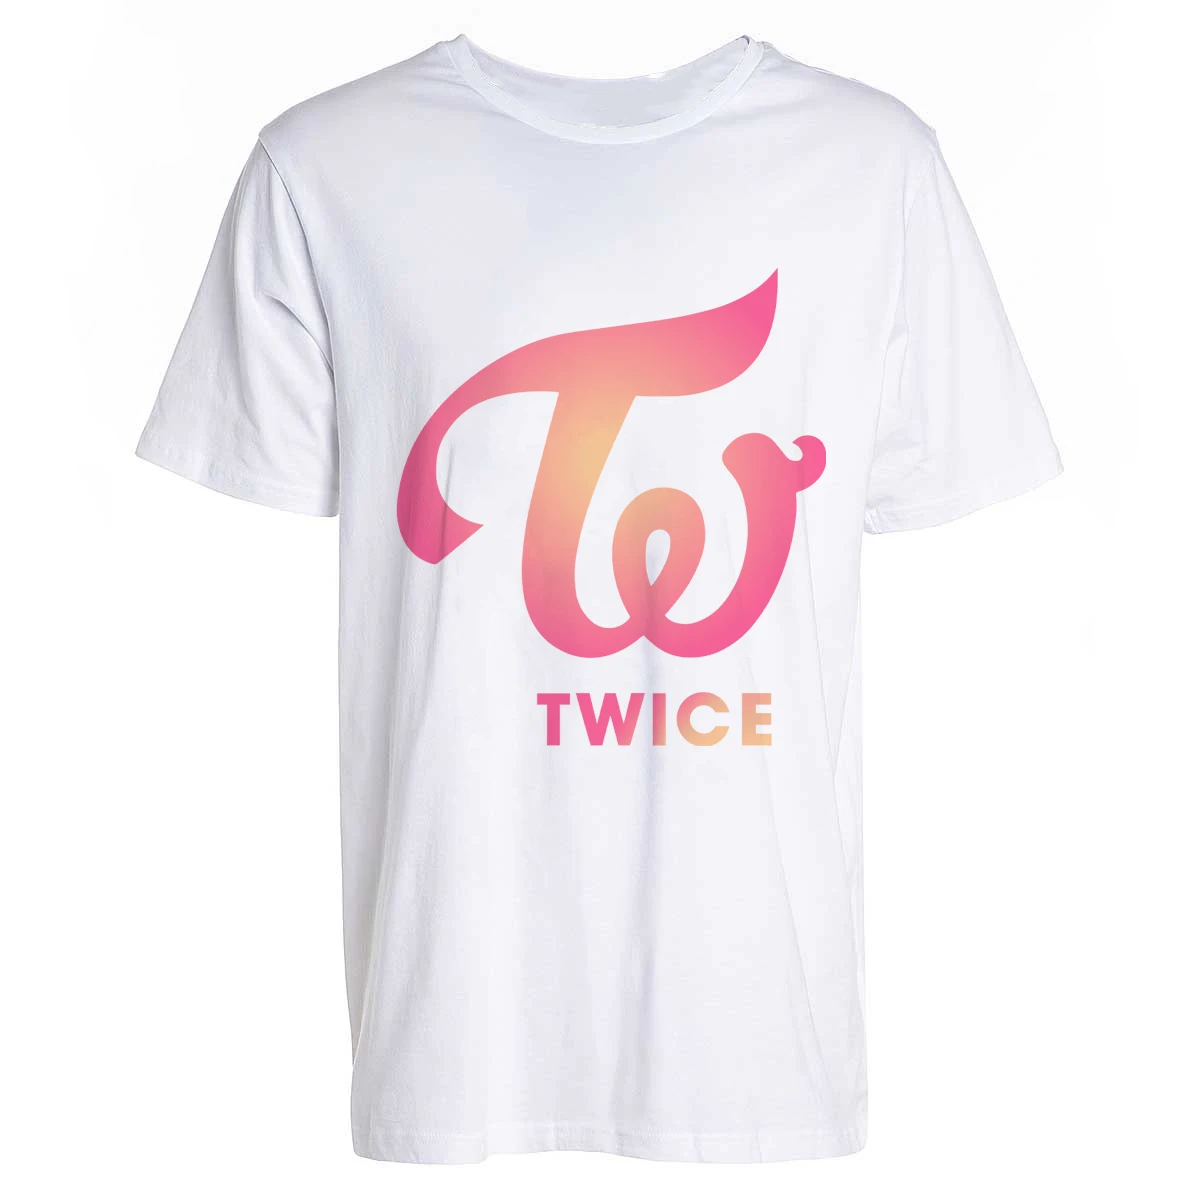 

Korean Twice T Shirt Man Print Tshirt Harajuku Tops Kpop Ulzzang Graphic Female T-shirt Kawaii 90s Kpop Tees Tumblr Streetwear